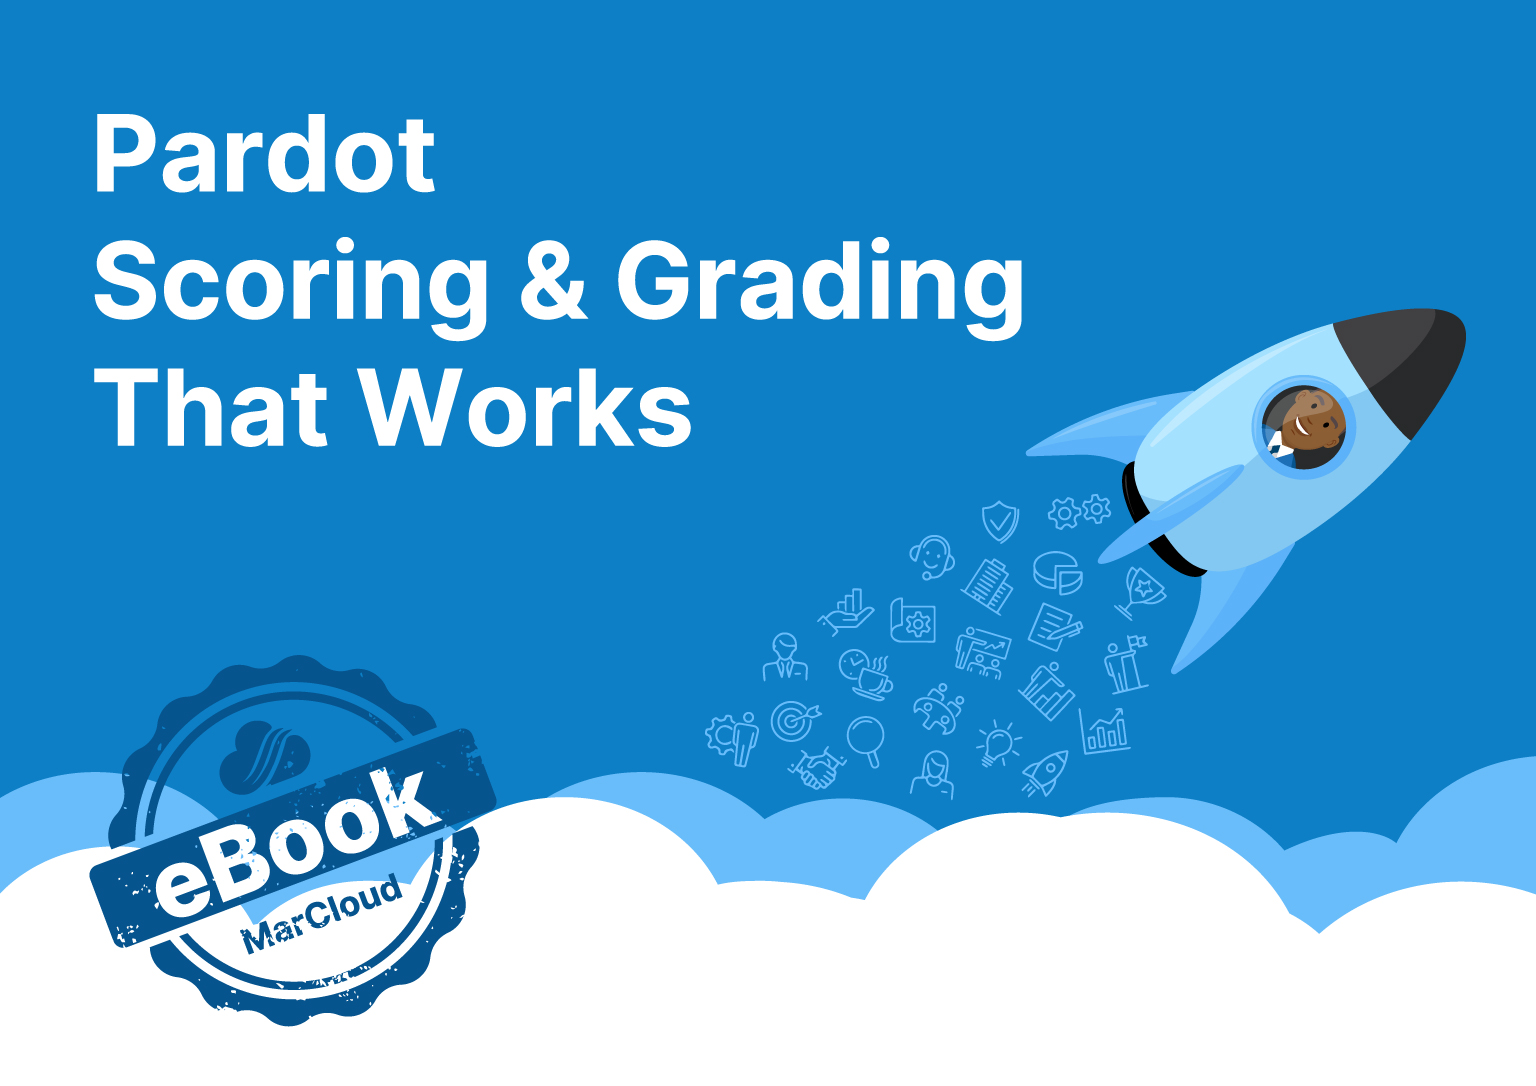 Pardot B2B Scoring and Grading eBook